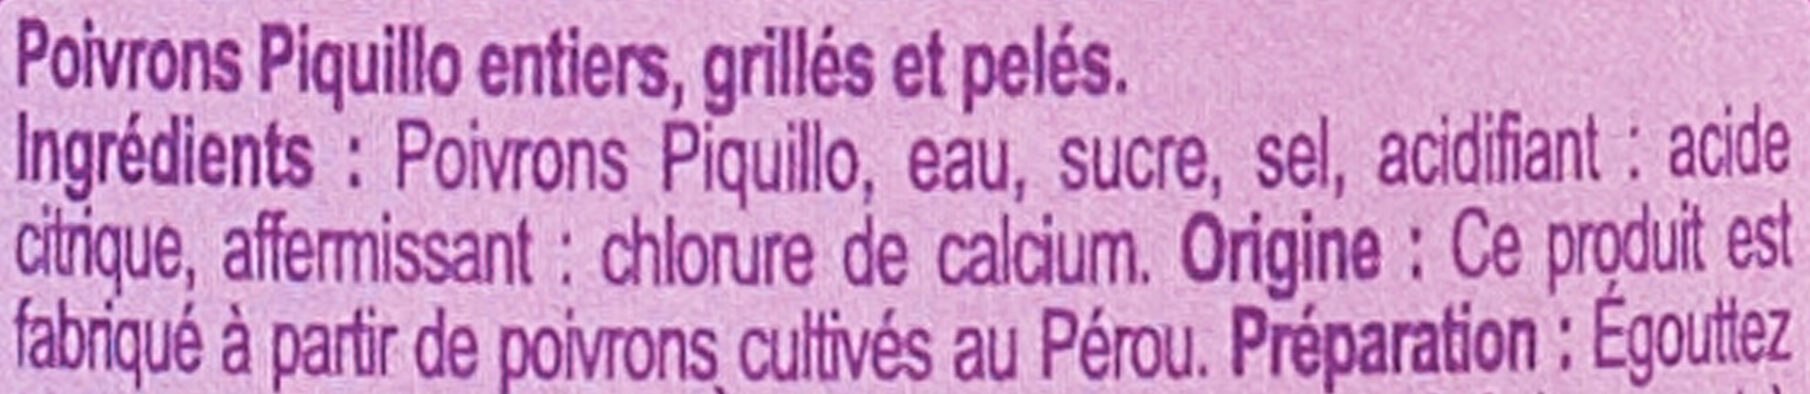 Poivrons Piquillo Grillés - Ingredients - fr